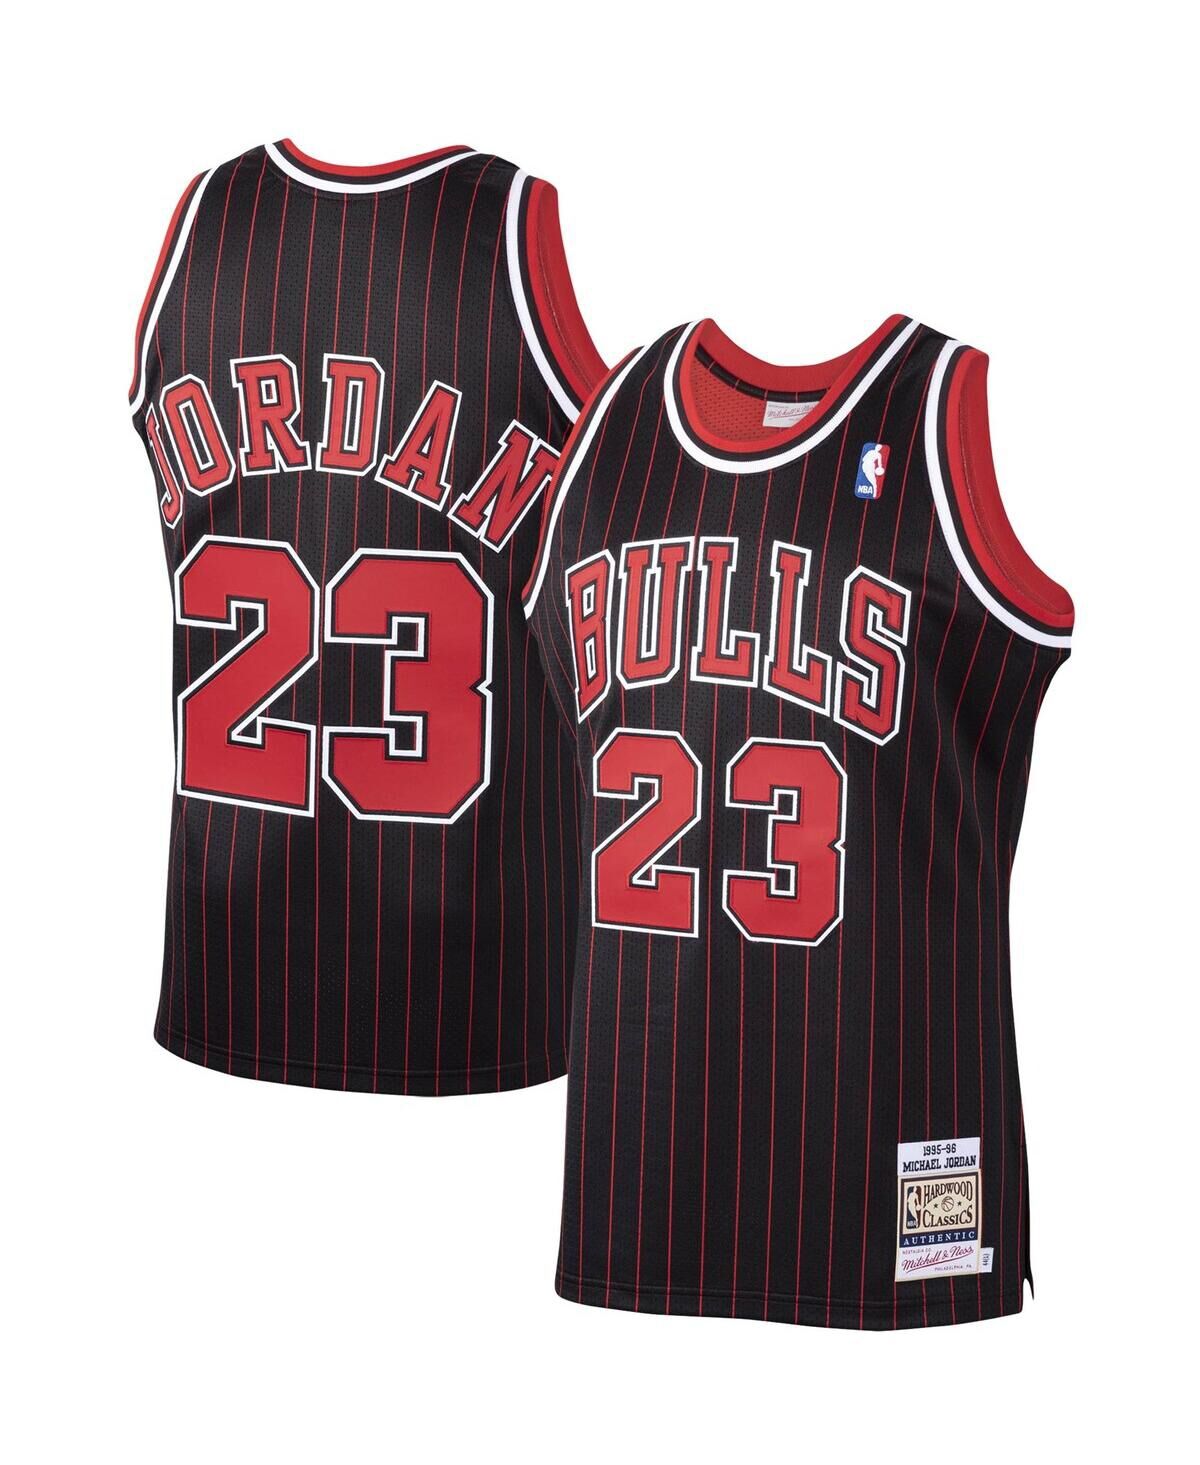 Mitchell & Ness Men's Mitchell & Ness Michael Jordan Black Chicago Bulls 1995/96 Hardwood Classics Authentic Jersey - Black